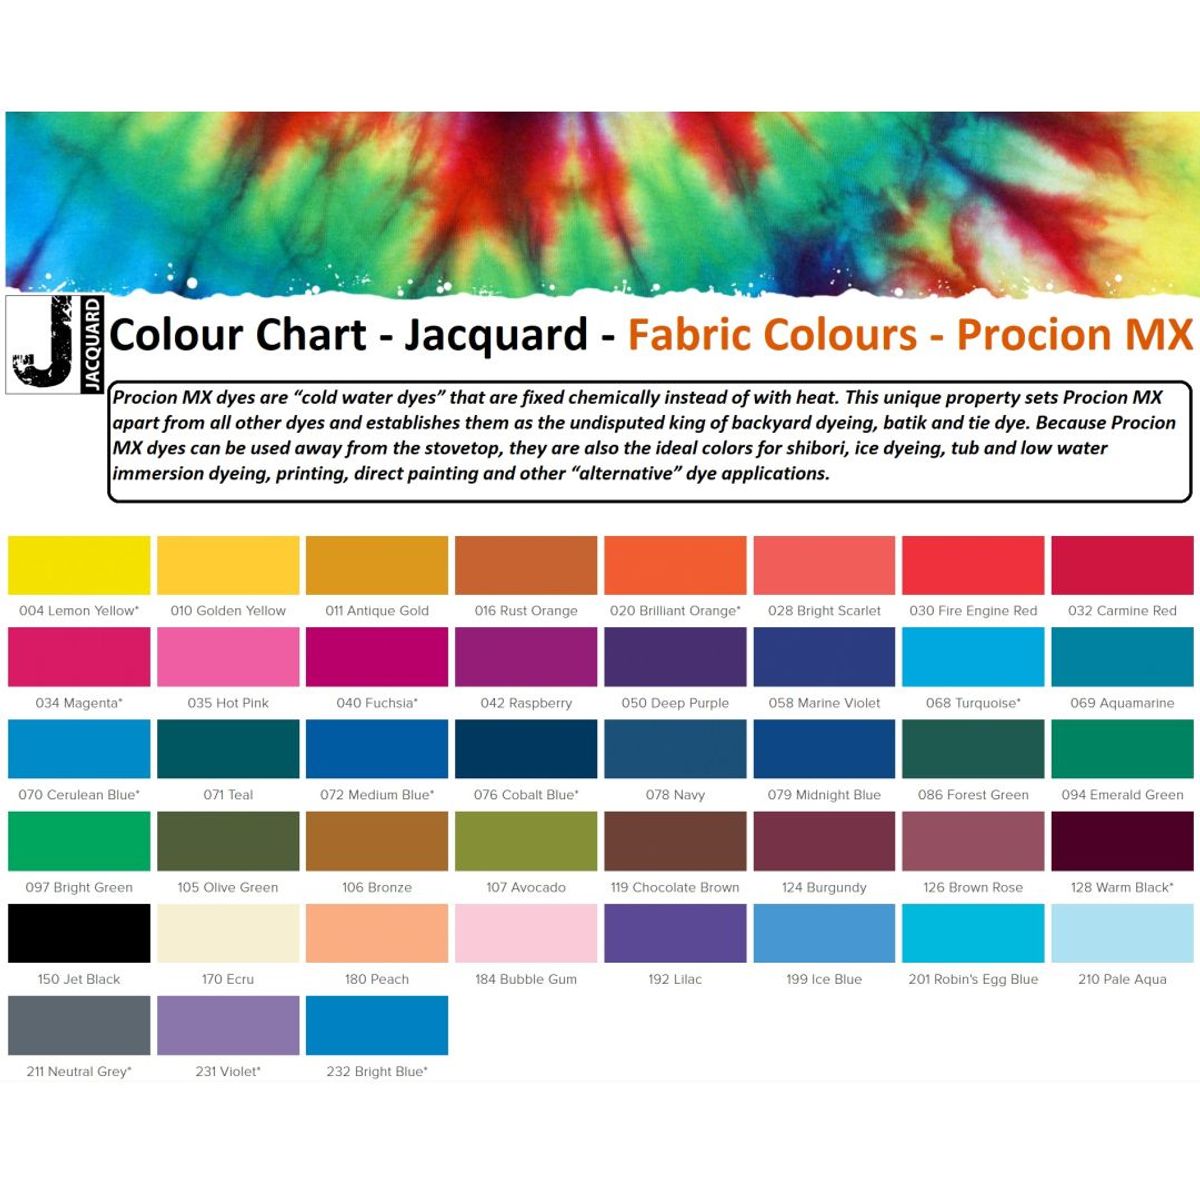 Jacquard - Procion MX Dye - Fabric Textile - Bright Green 097